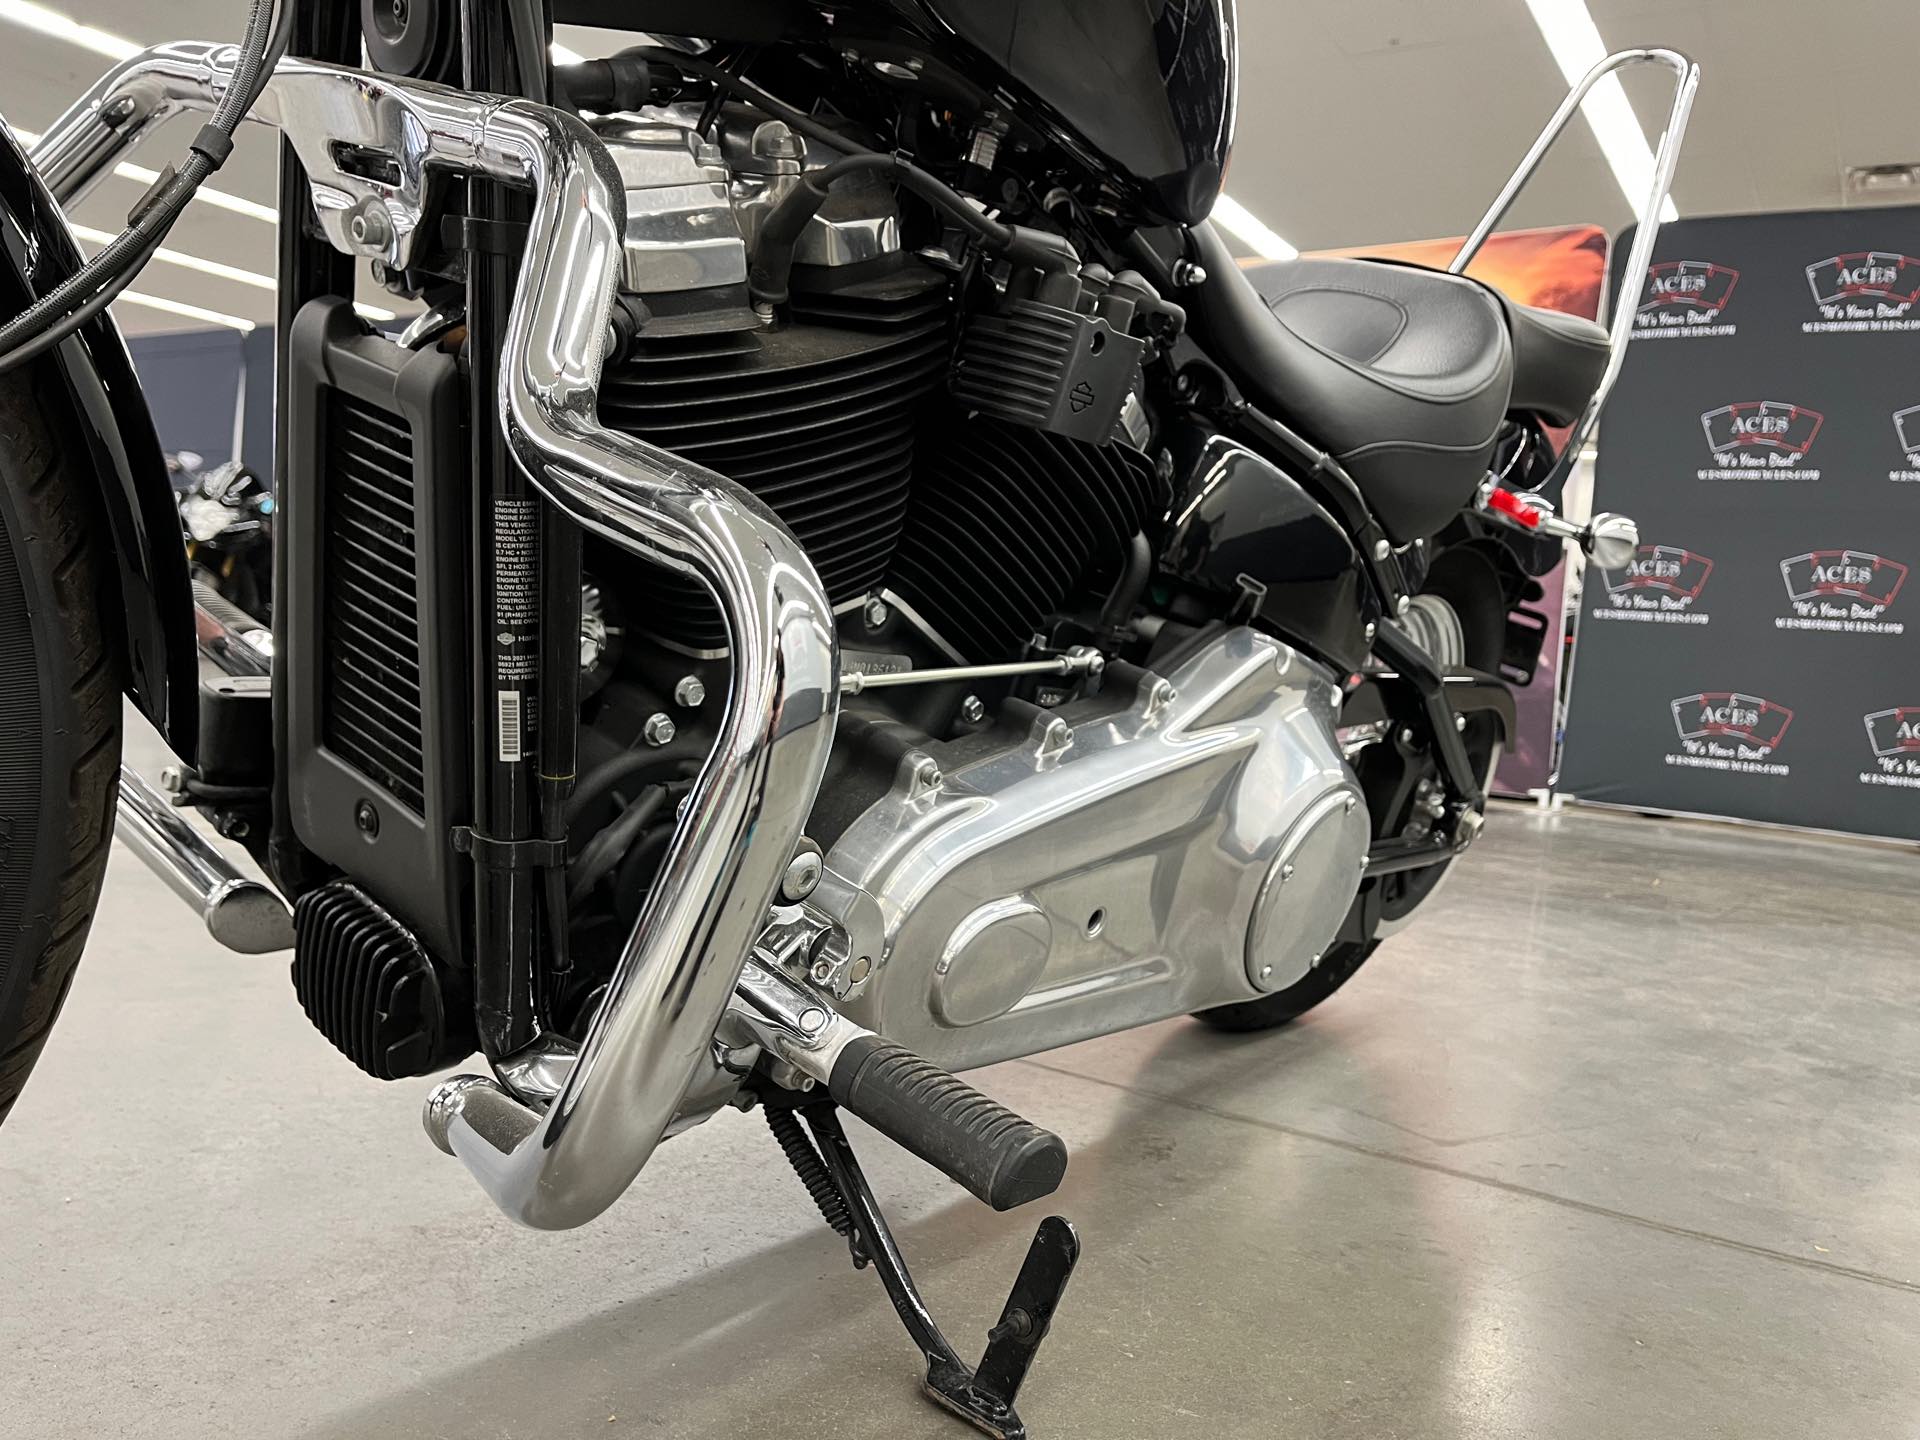 2021 Harley-Davidson Softail Standard at Aces Motorcycles - Denver